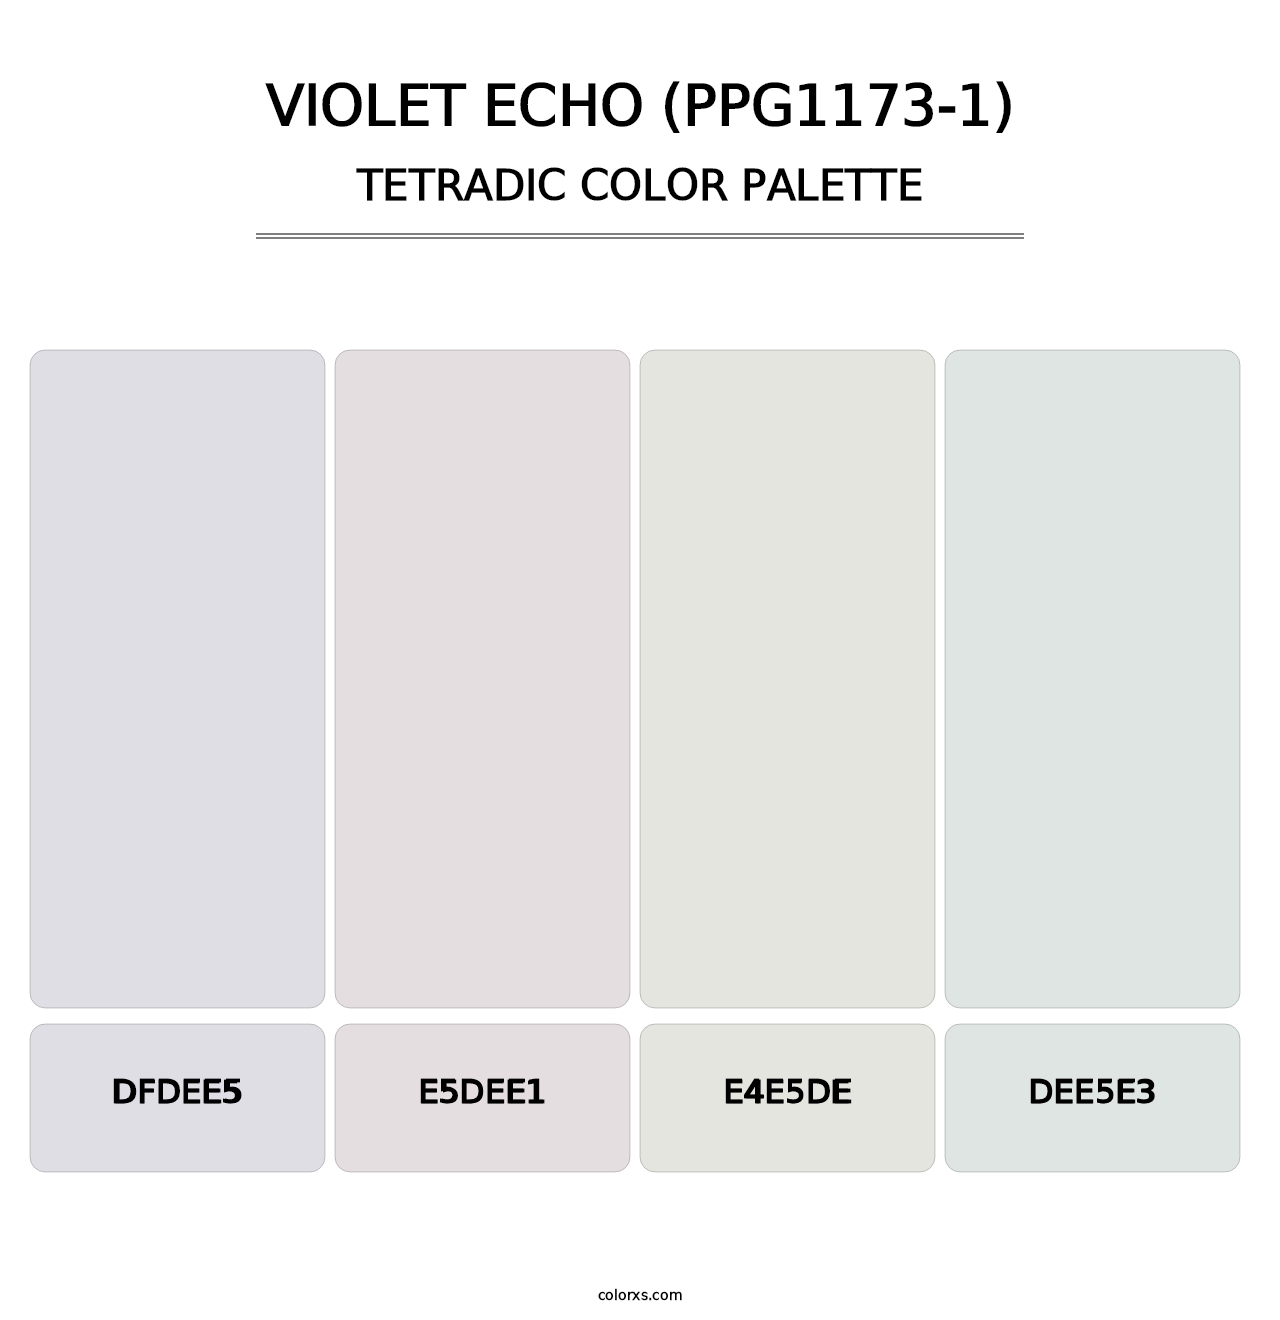 Violet Echo (PPG1173-1) - Tetradic Color Palette